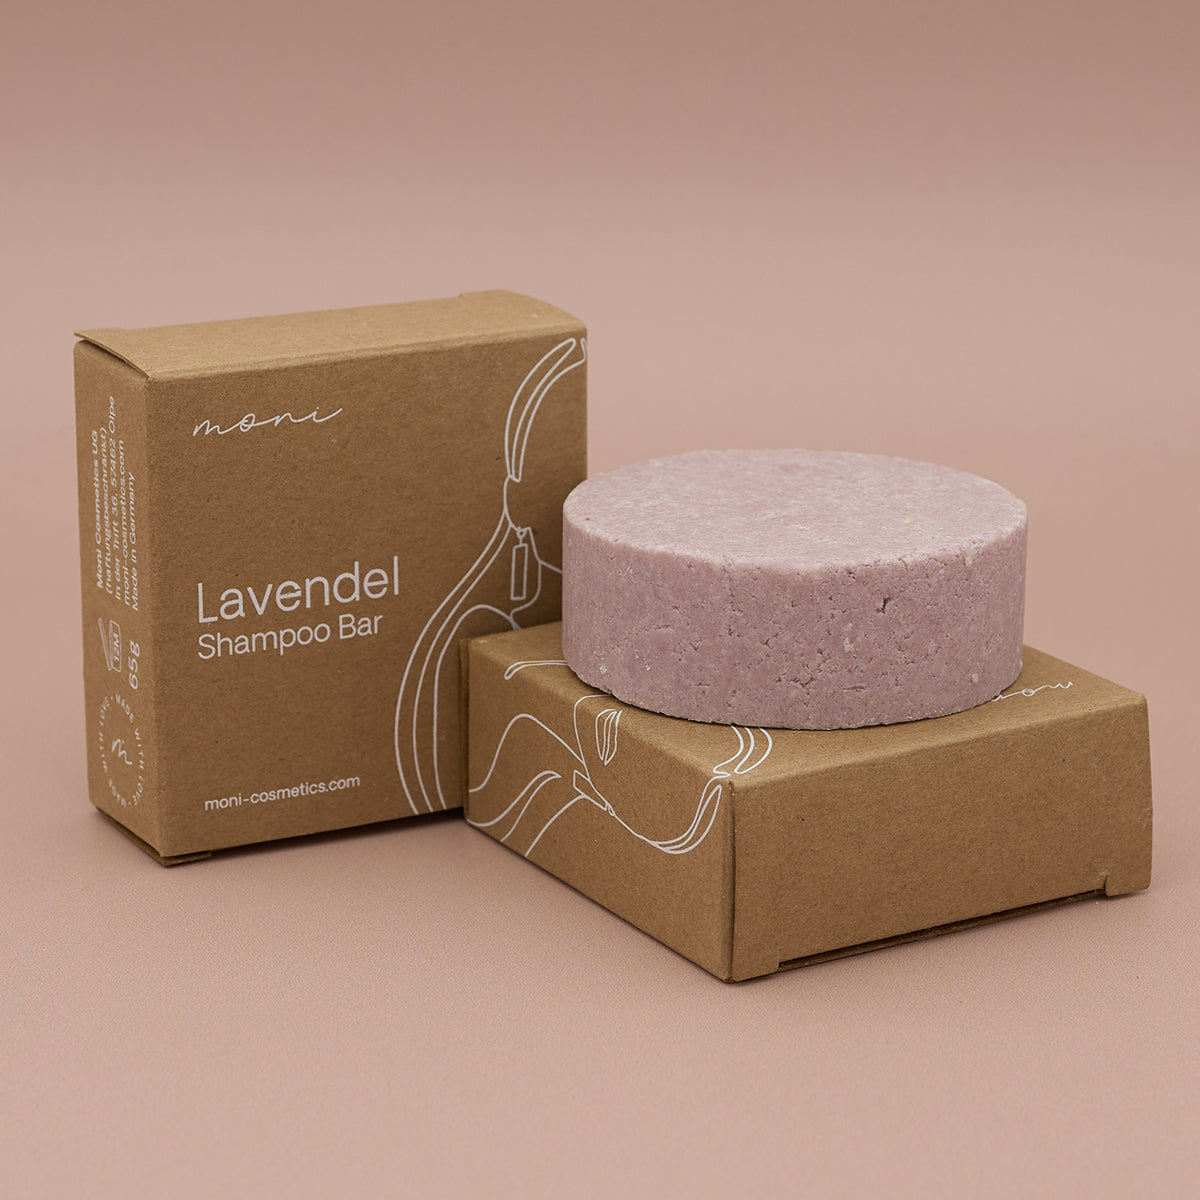 Lavendel Shampoo Bar